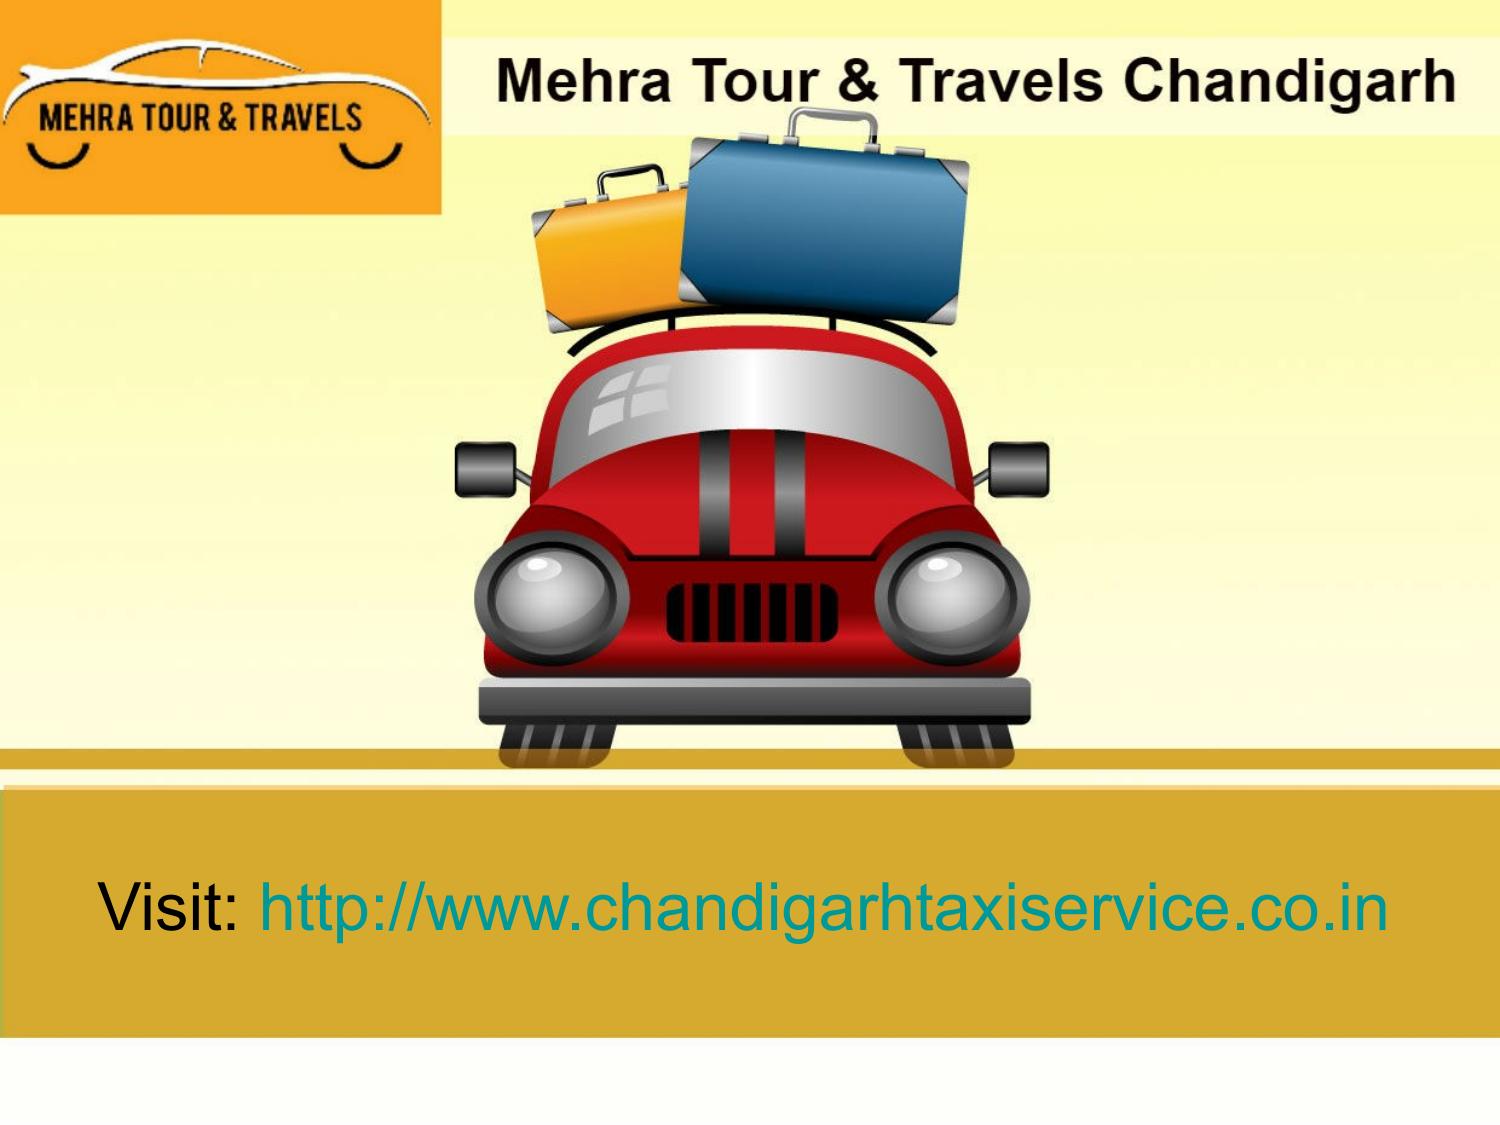 Mehra Tour & Travels in chandigarh